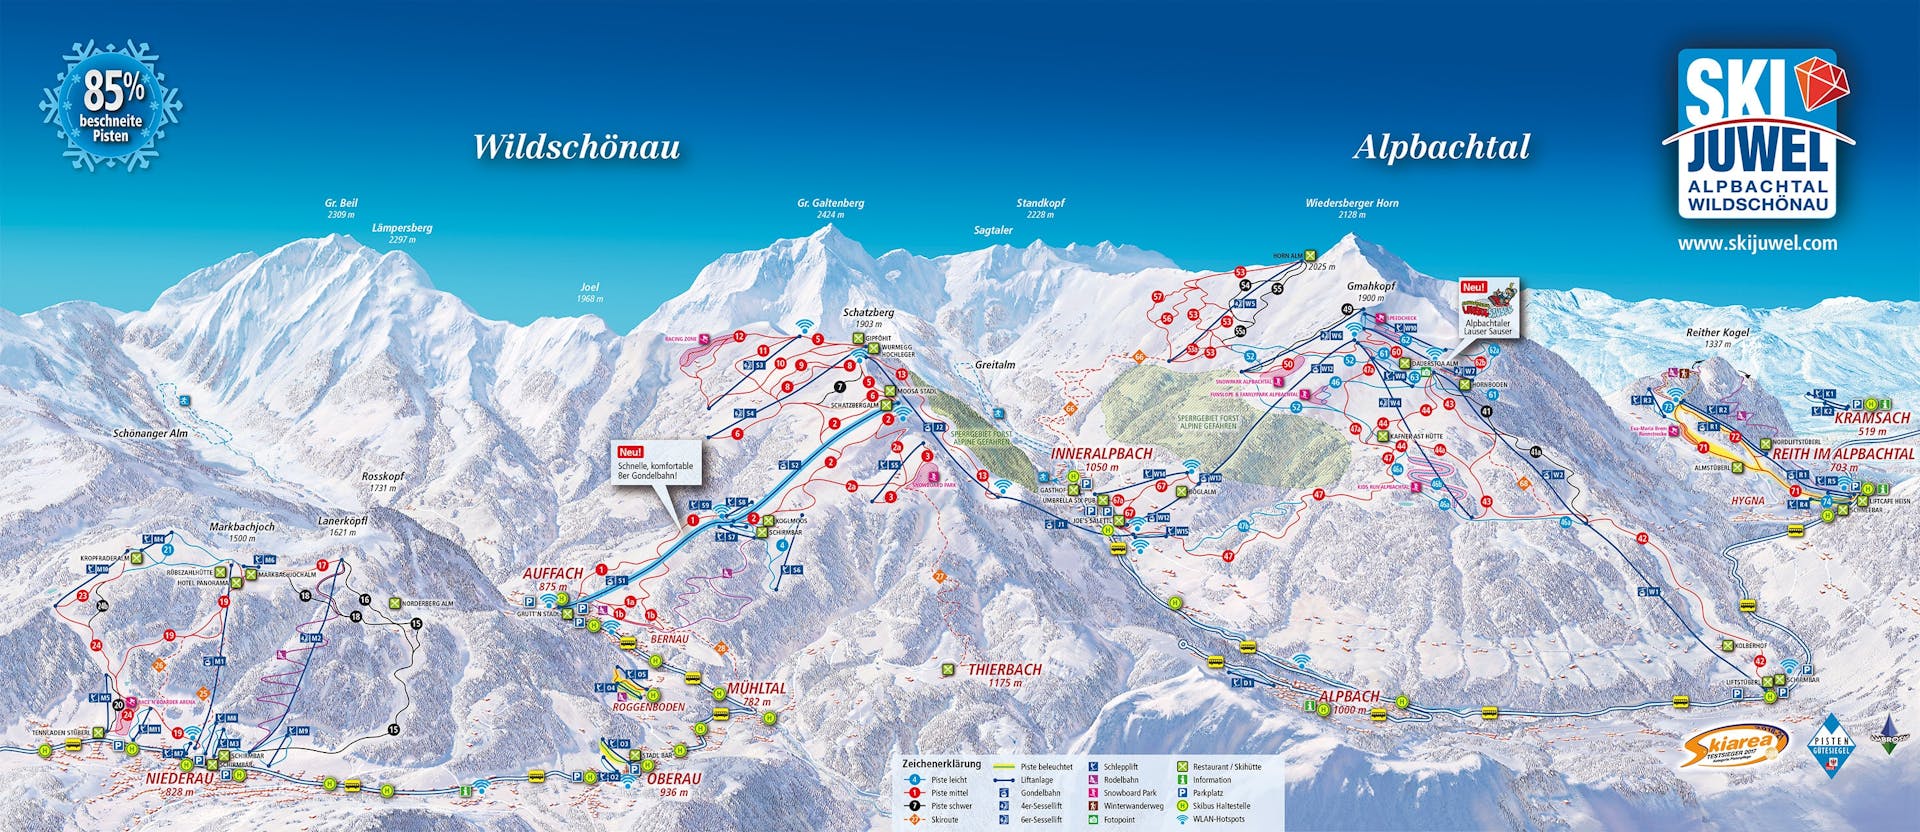 Wildschonau ski map